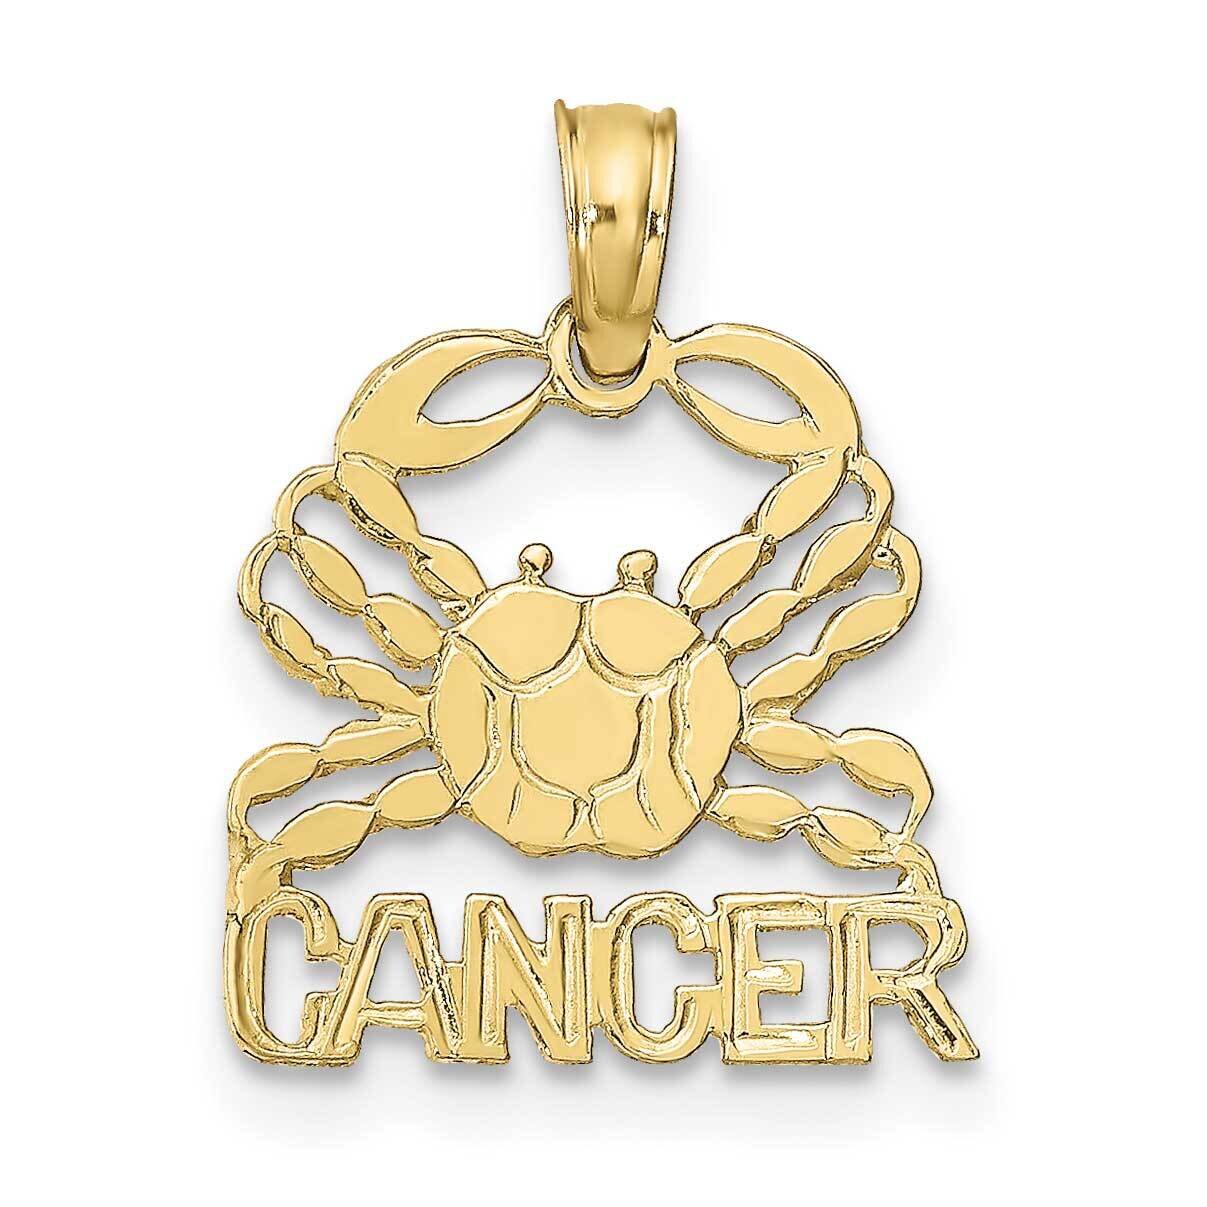 Cancer Charm 10k Gold 10K8949